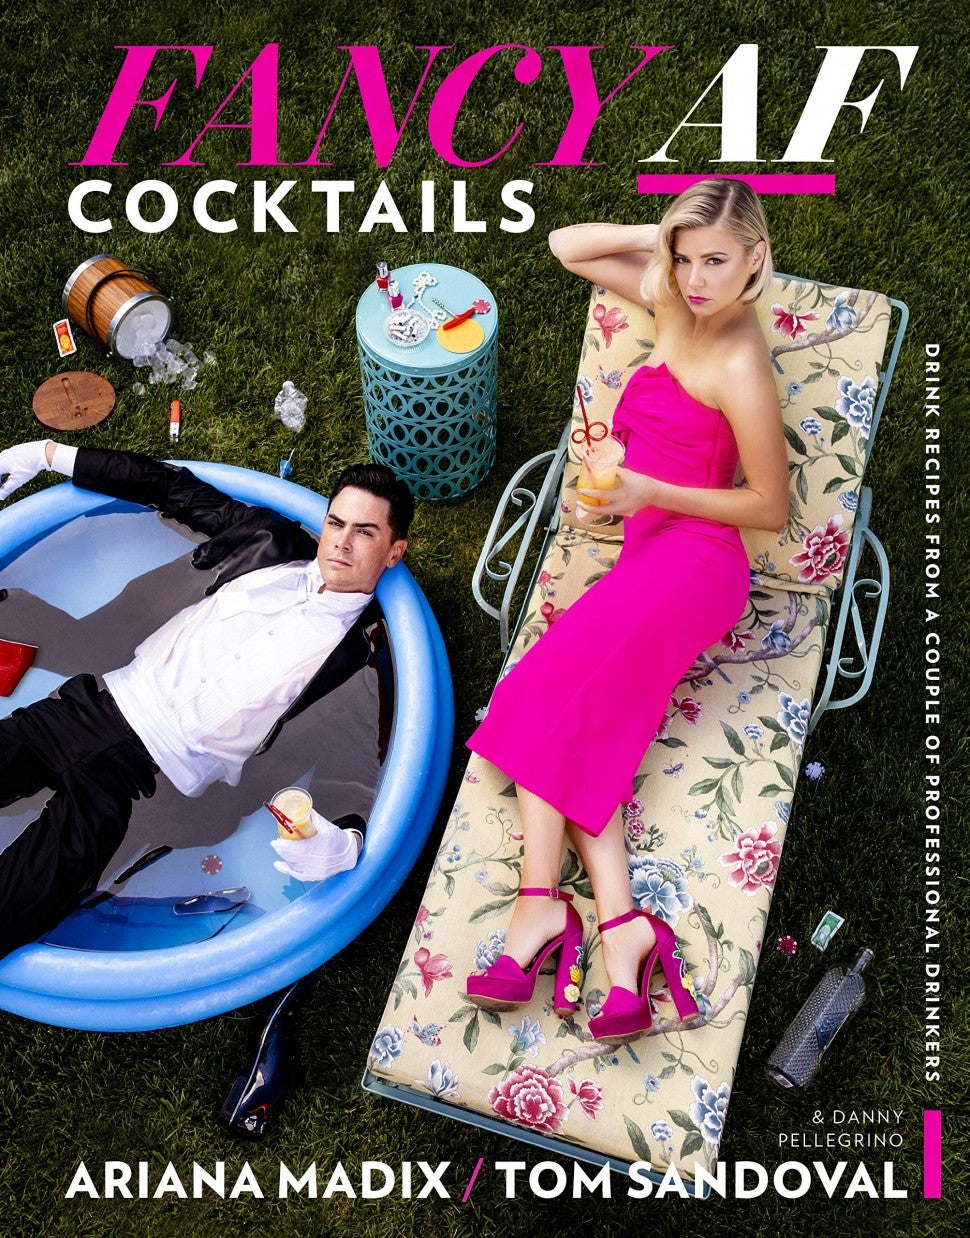 Tom Sandoval and Ariana Madix's book, 'Fancy AF Cocktails.'